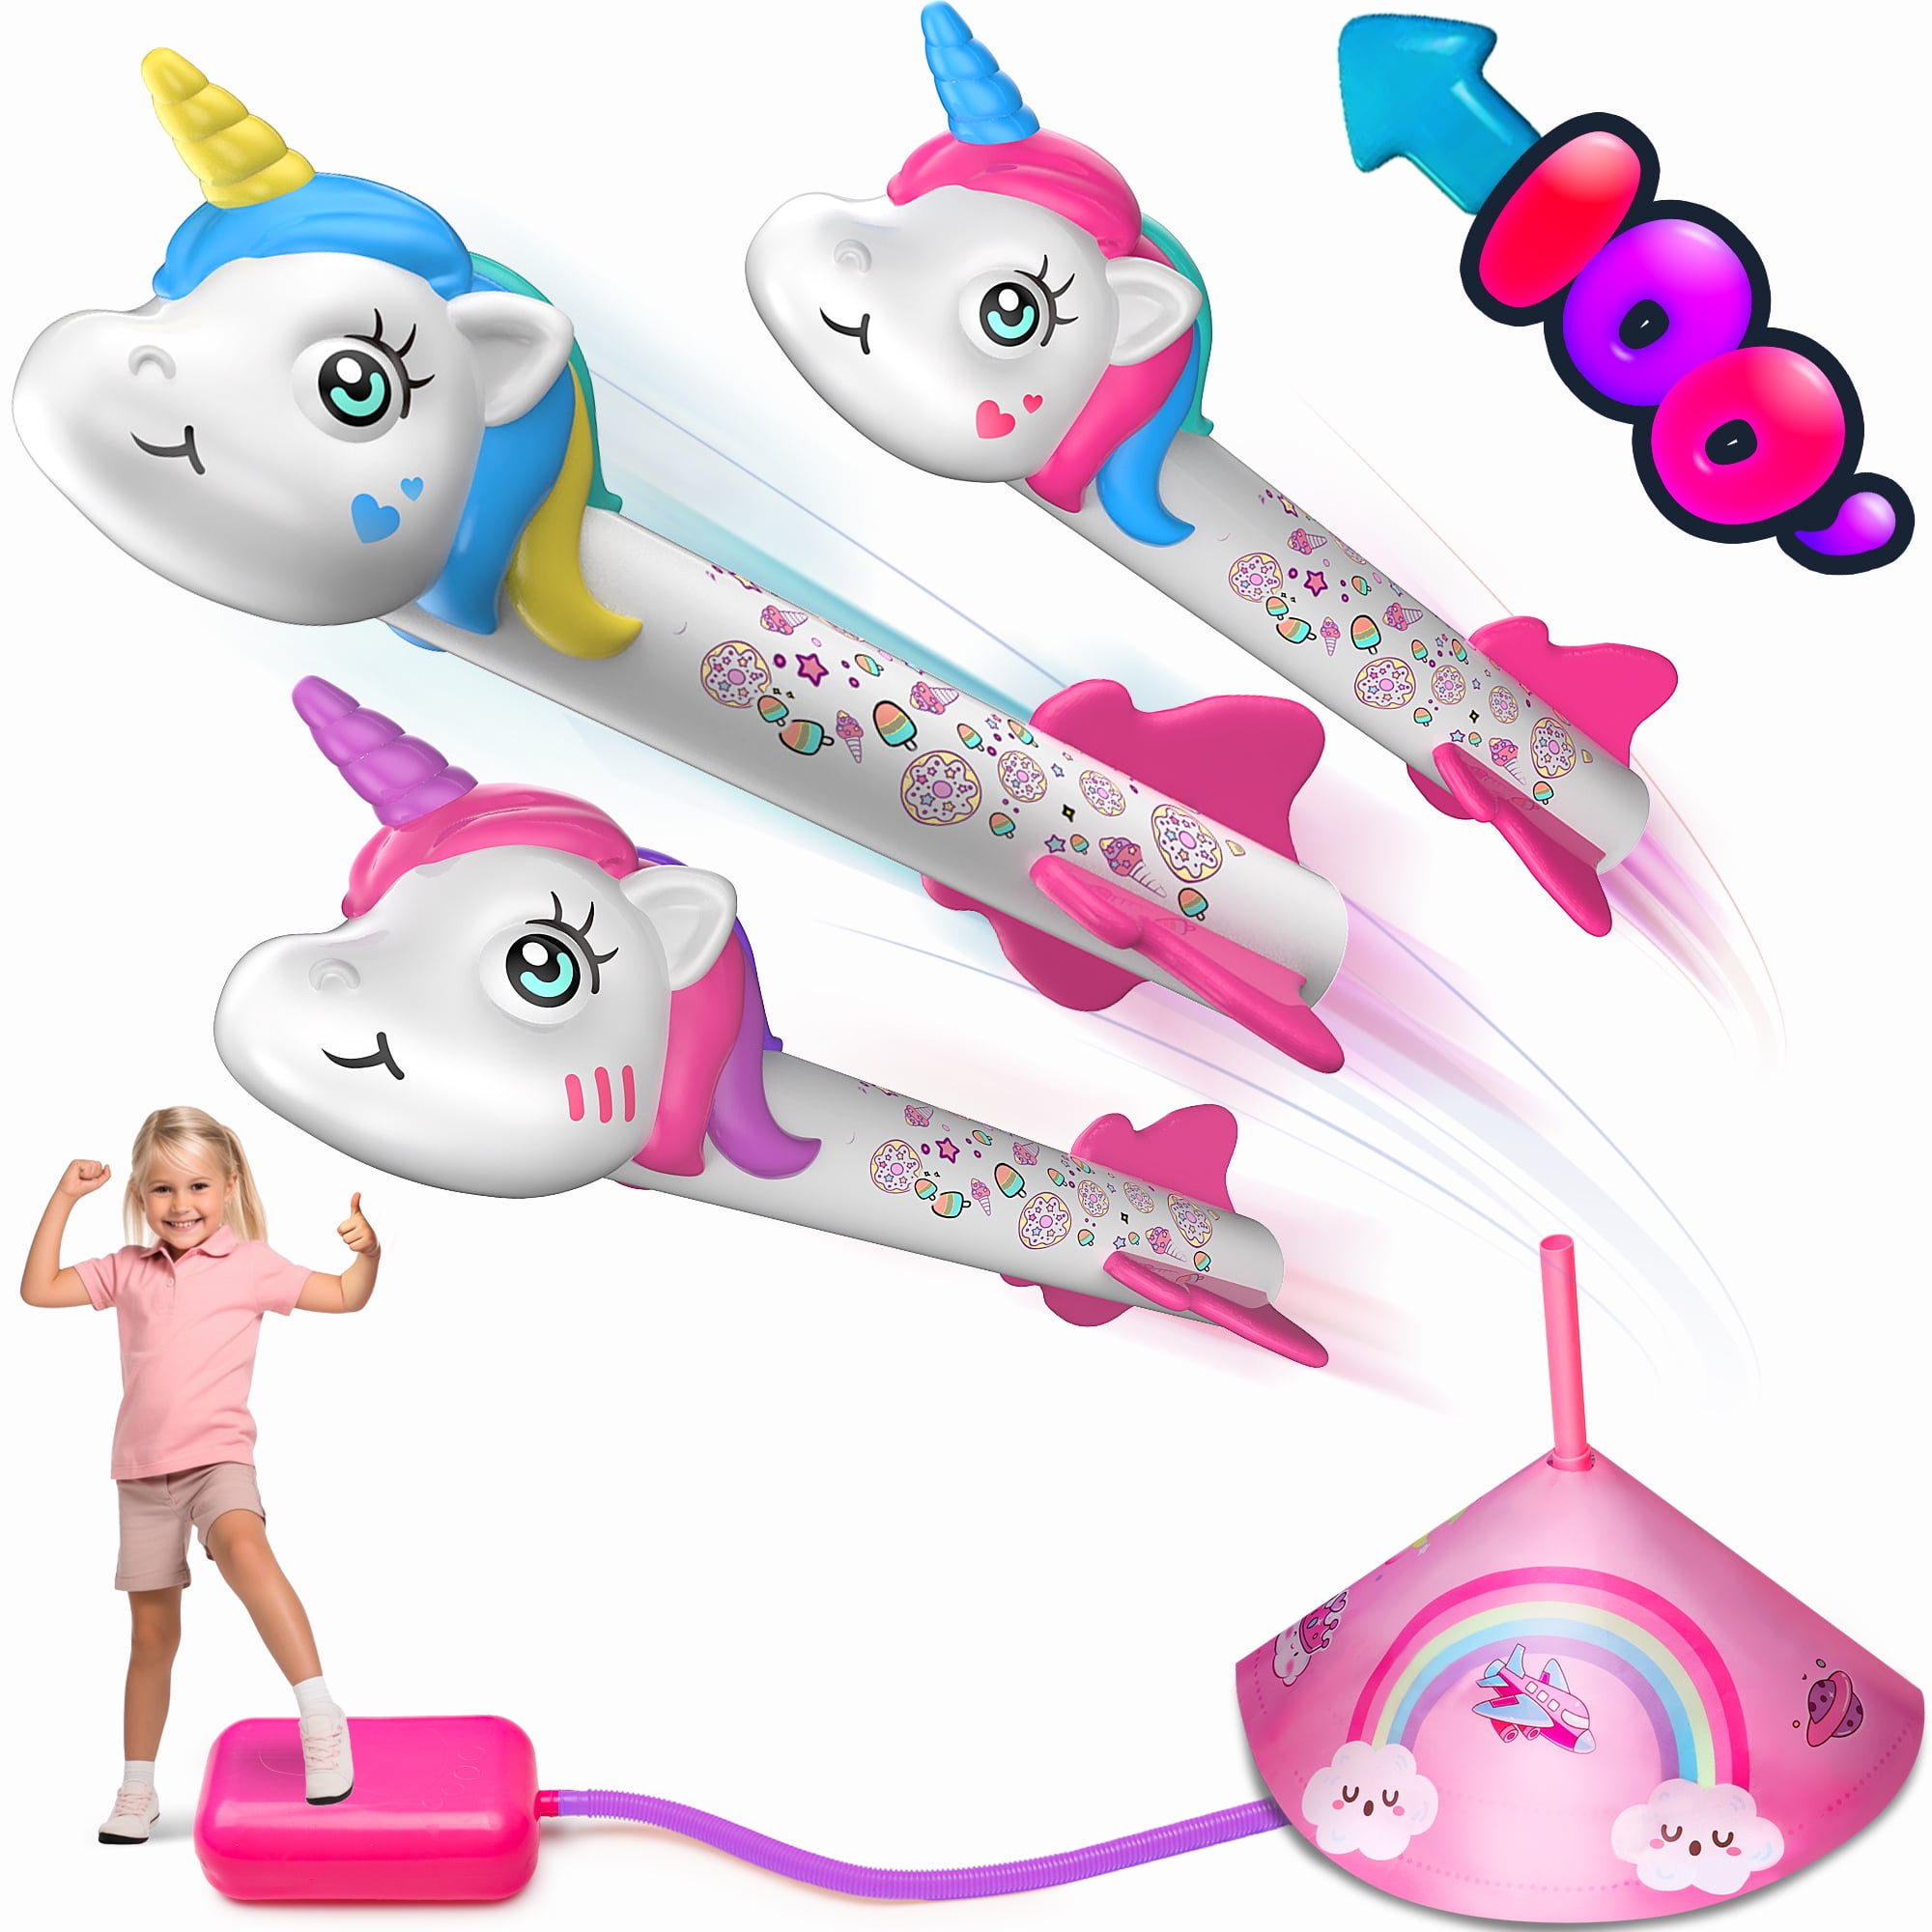 Hot Bee Unicorn Toys for Girls, Stomp Launcher Toys, Kids